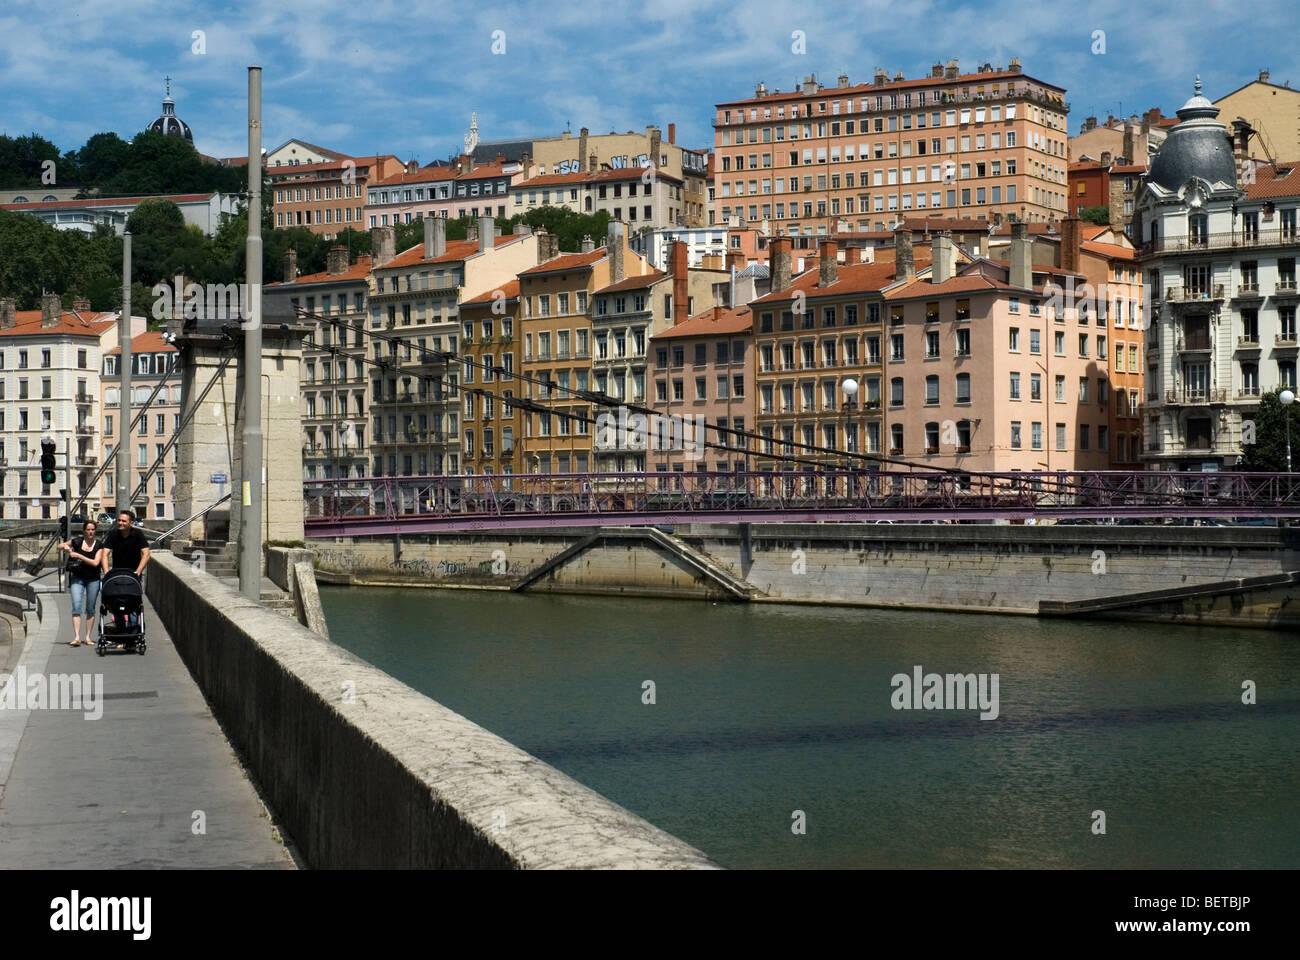 Passerelle St. Vincent, Suspended footbridge over Saone River, Lyon ...